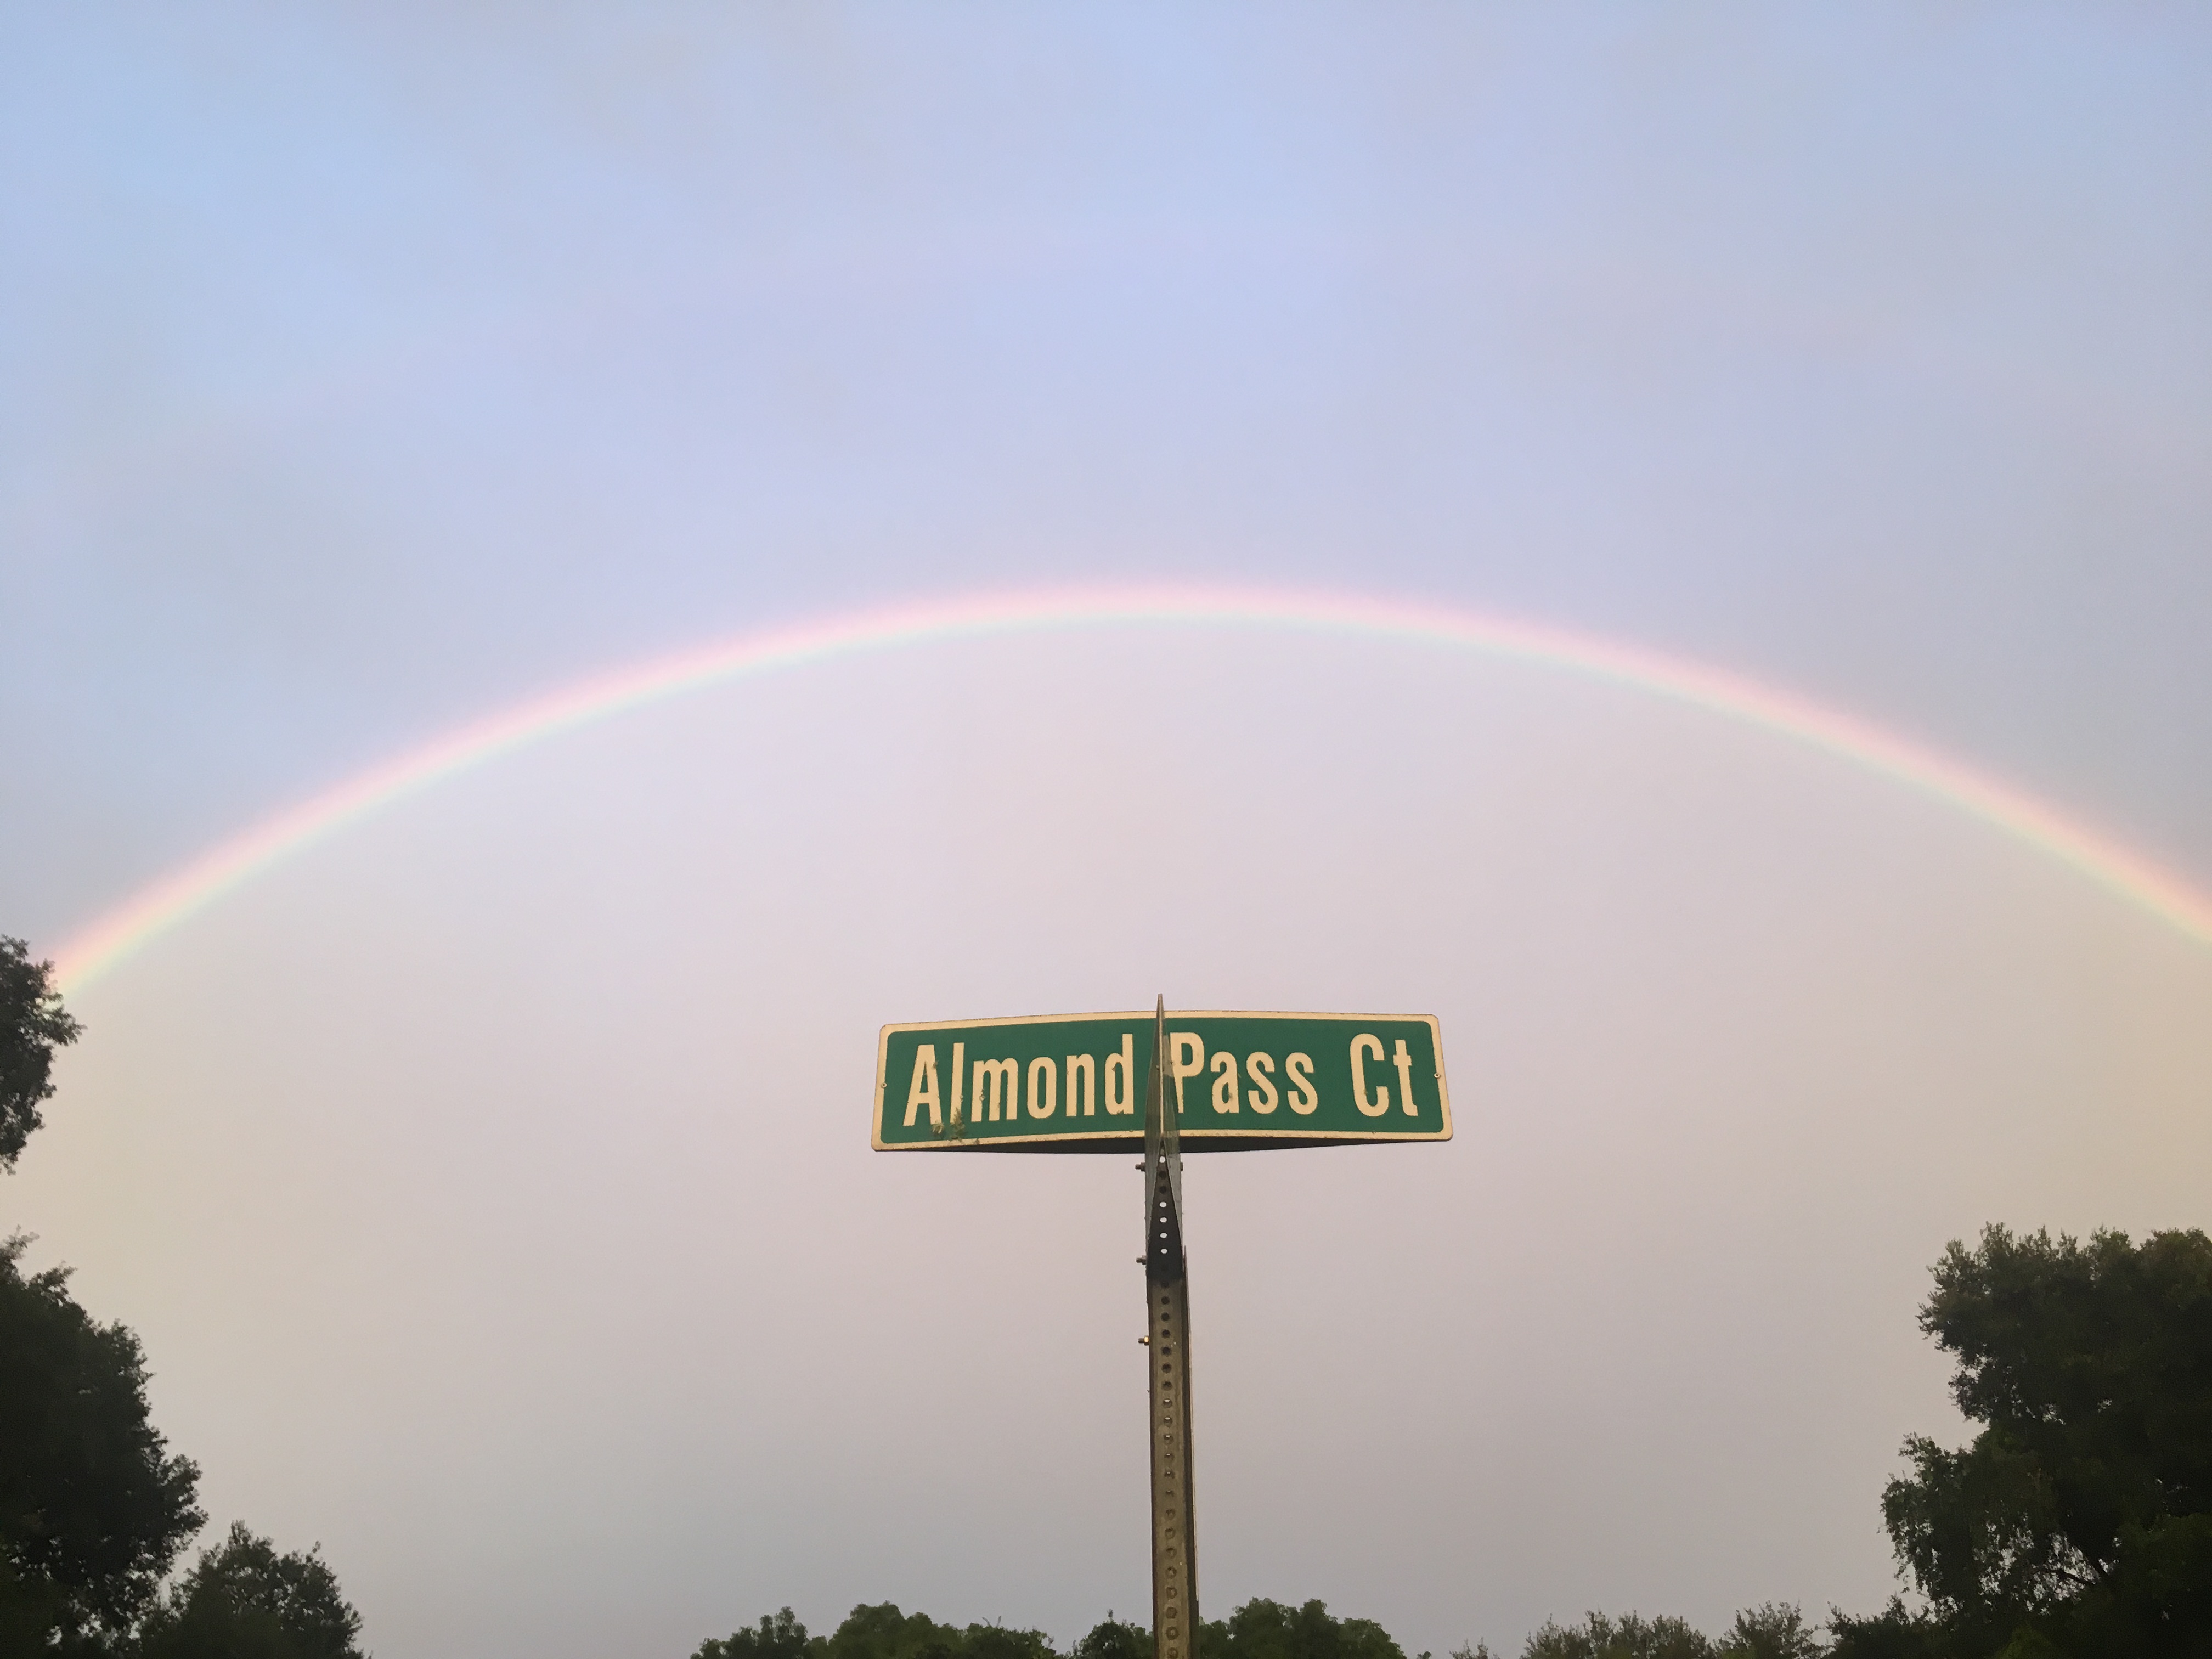 Rainbow over Ocala